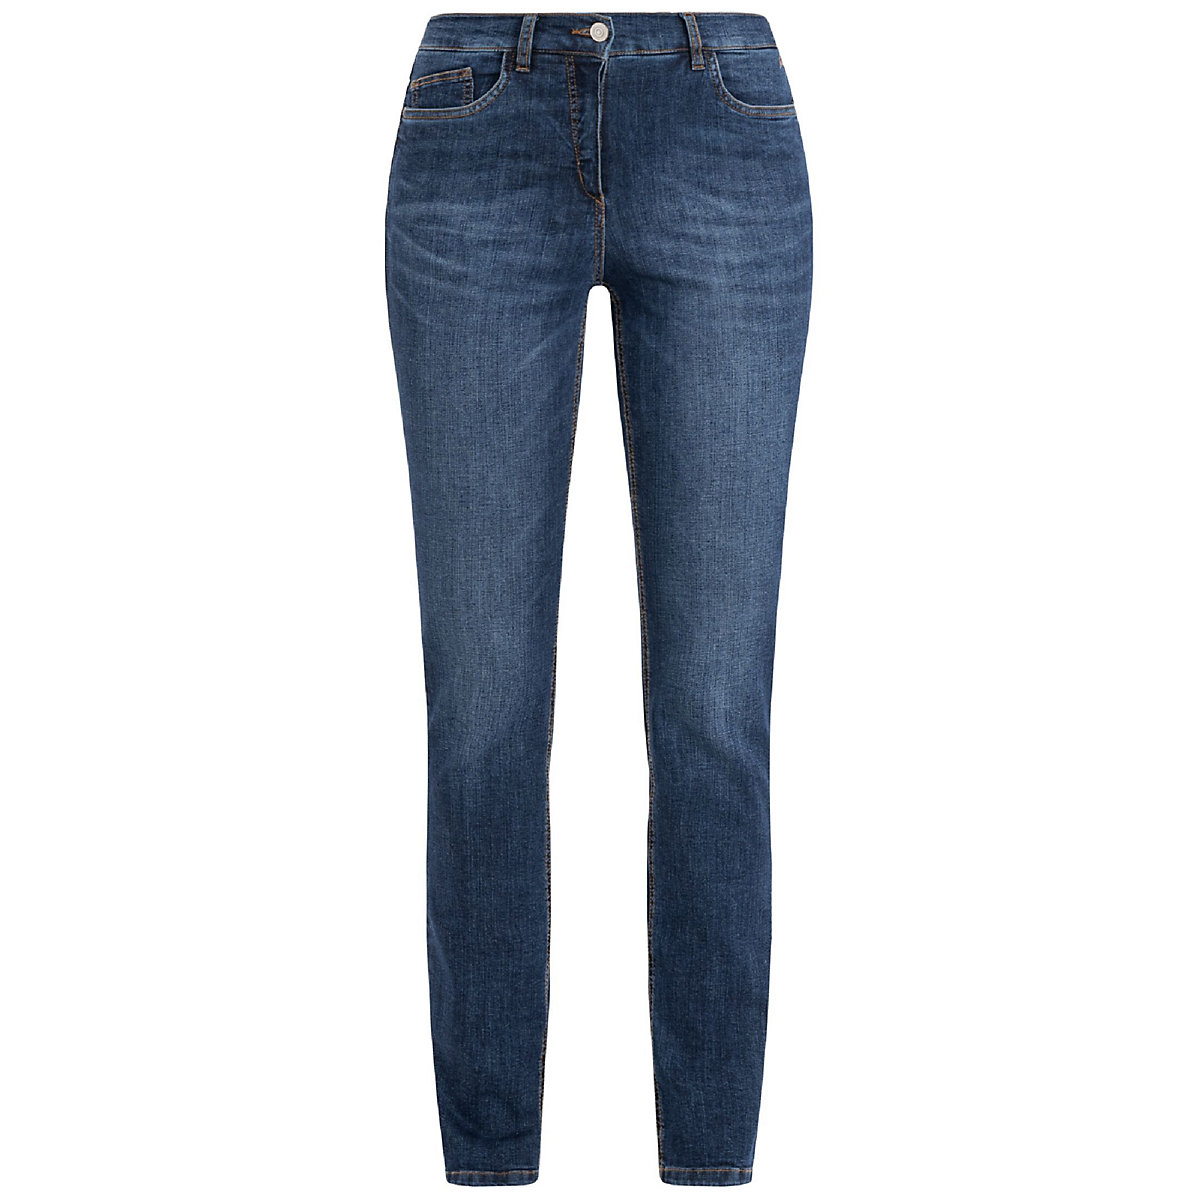 RECOVER pants Jeans ADRIAN blue denim